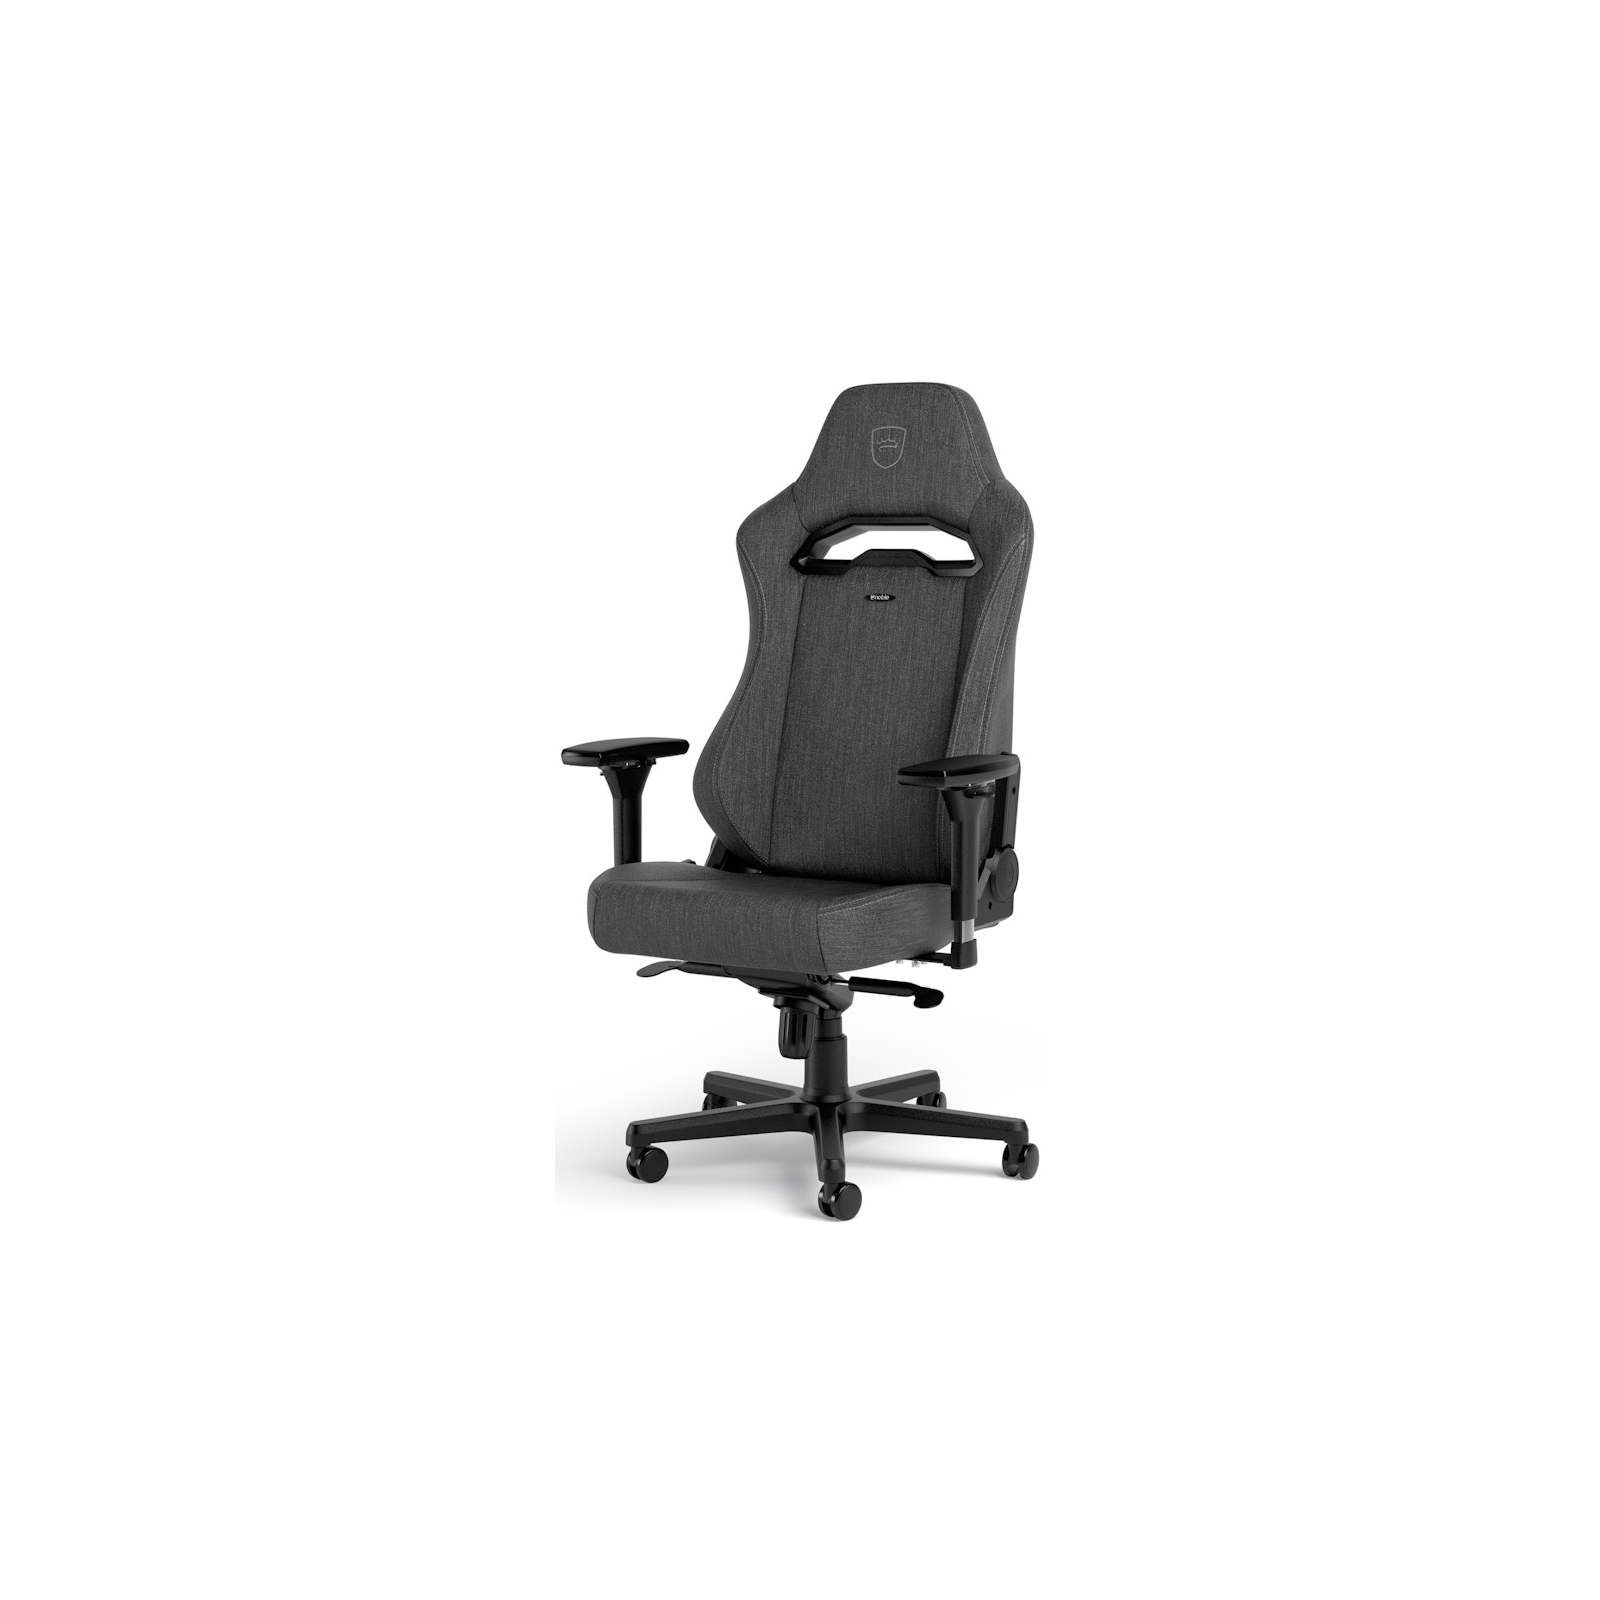 Кресло игровое Noblechairs HERO ST TX Gaming Chair Anthracite (NBL-HRO-ST-ATC) изображение 2